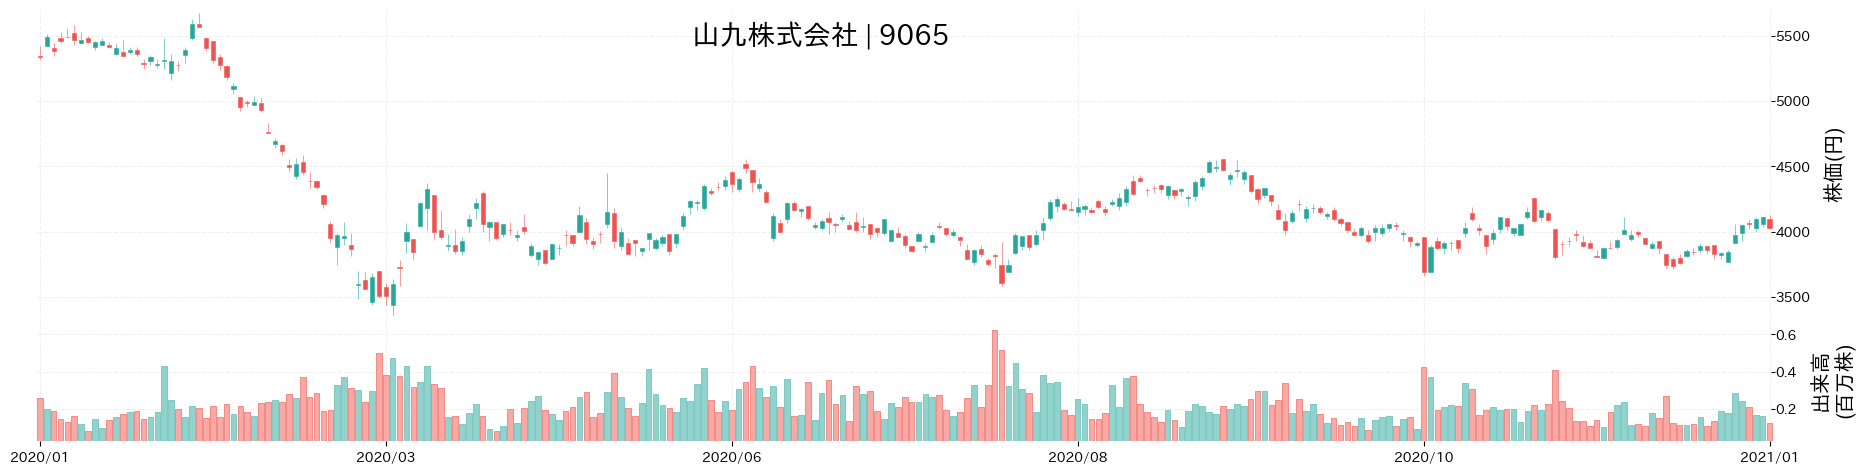 山九の株価推移(2020)